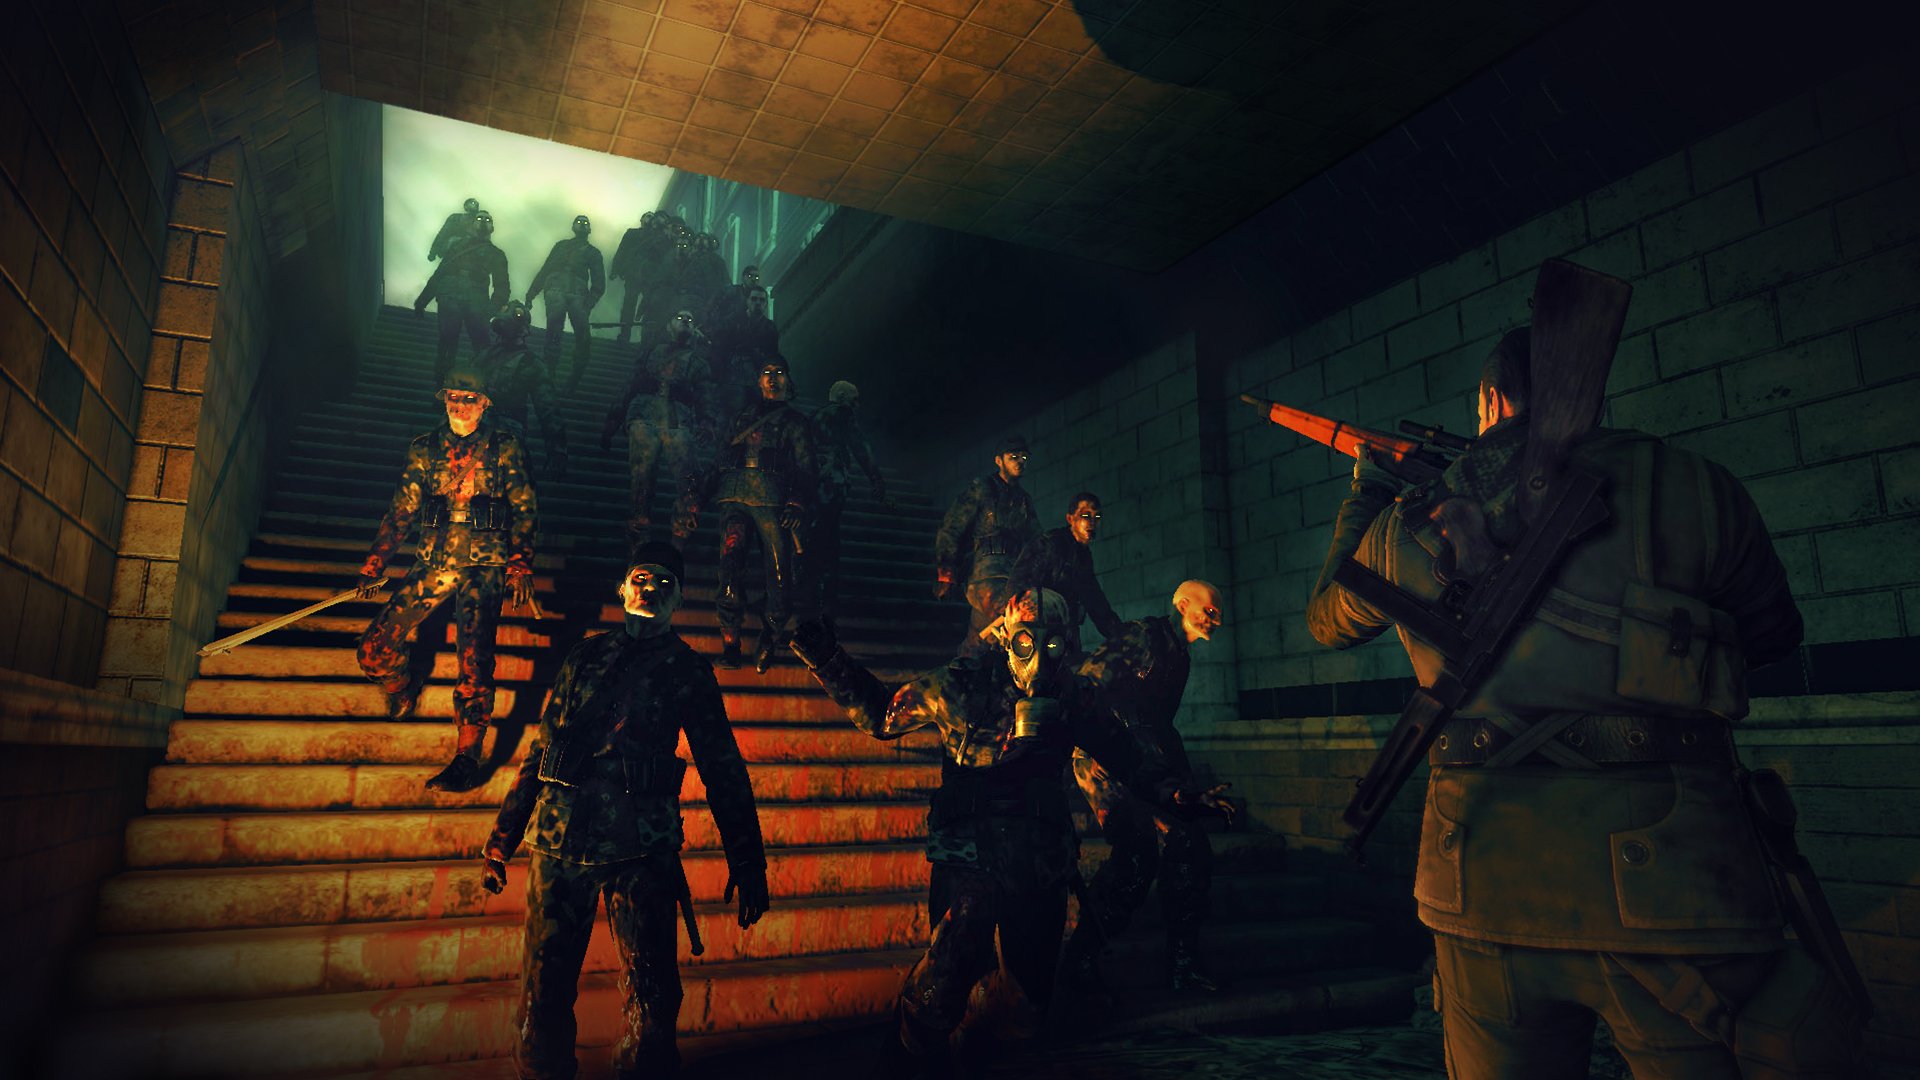 Análise de Zombie Army 4: Dead War